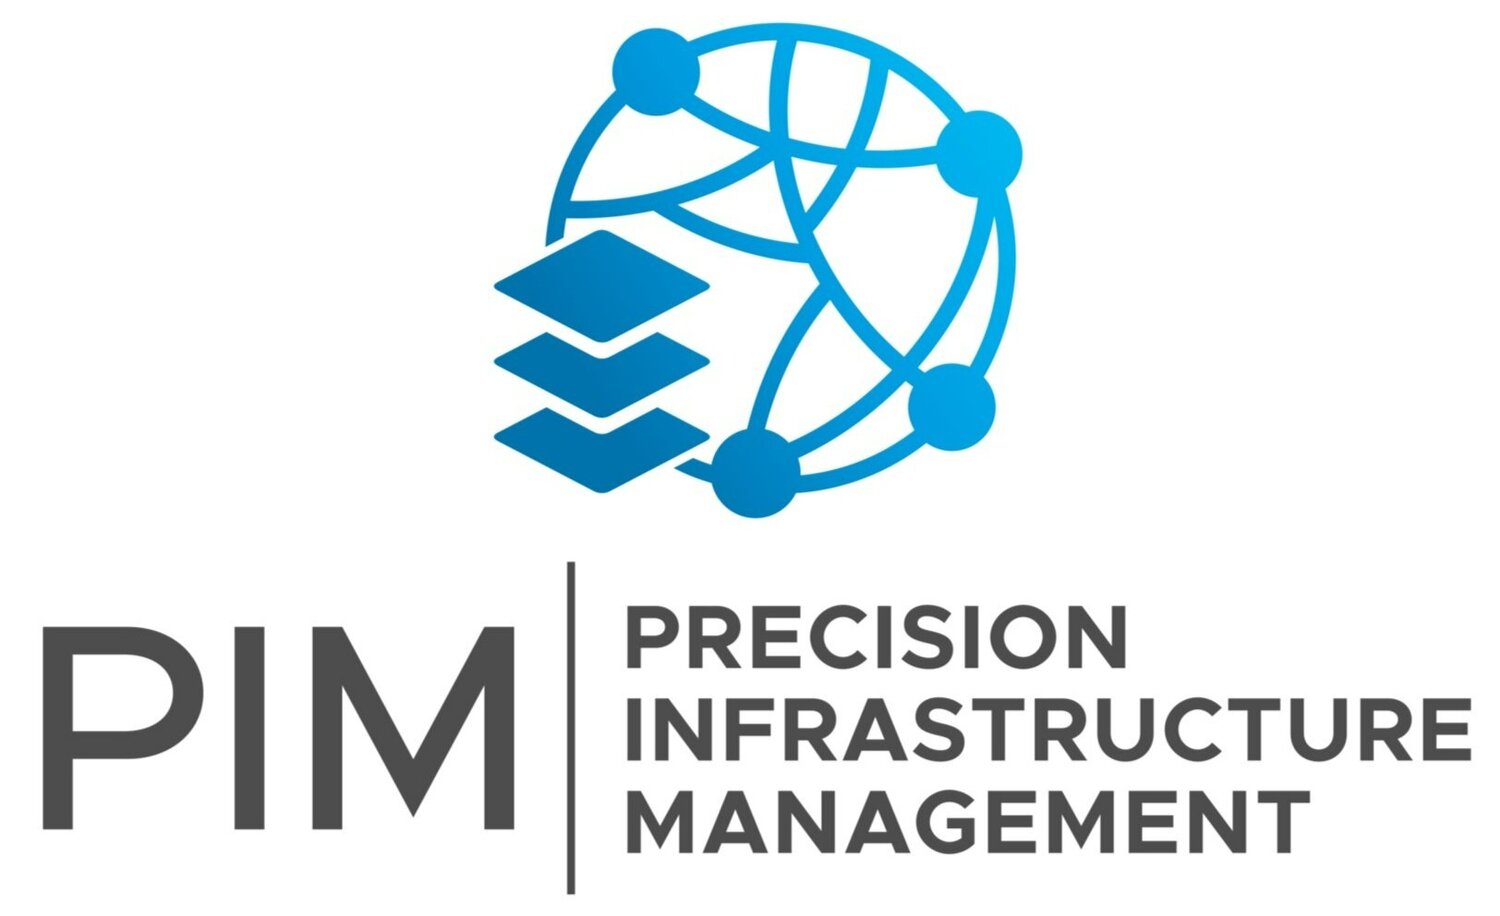 Precision Infrastructure Management